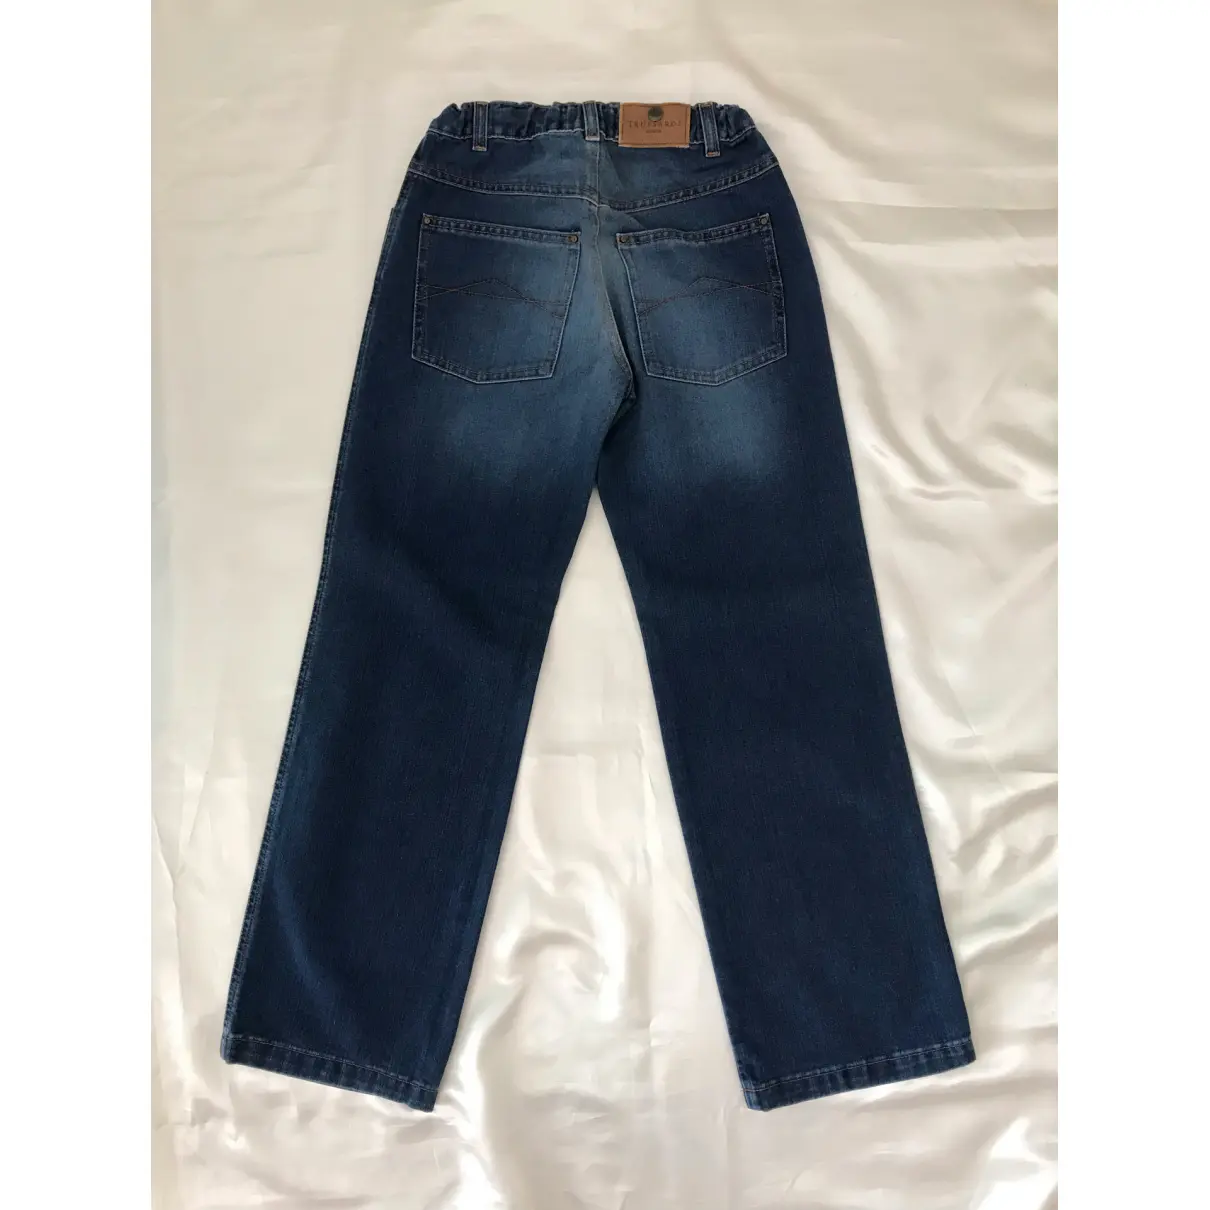 Buy Trussardi Jeans online